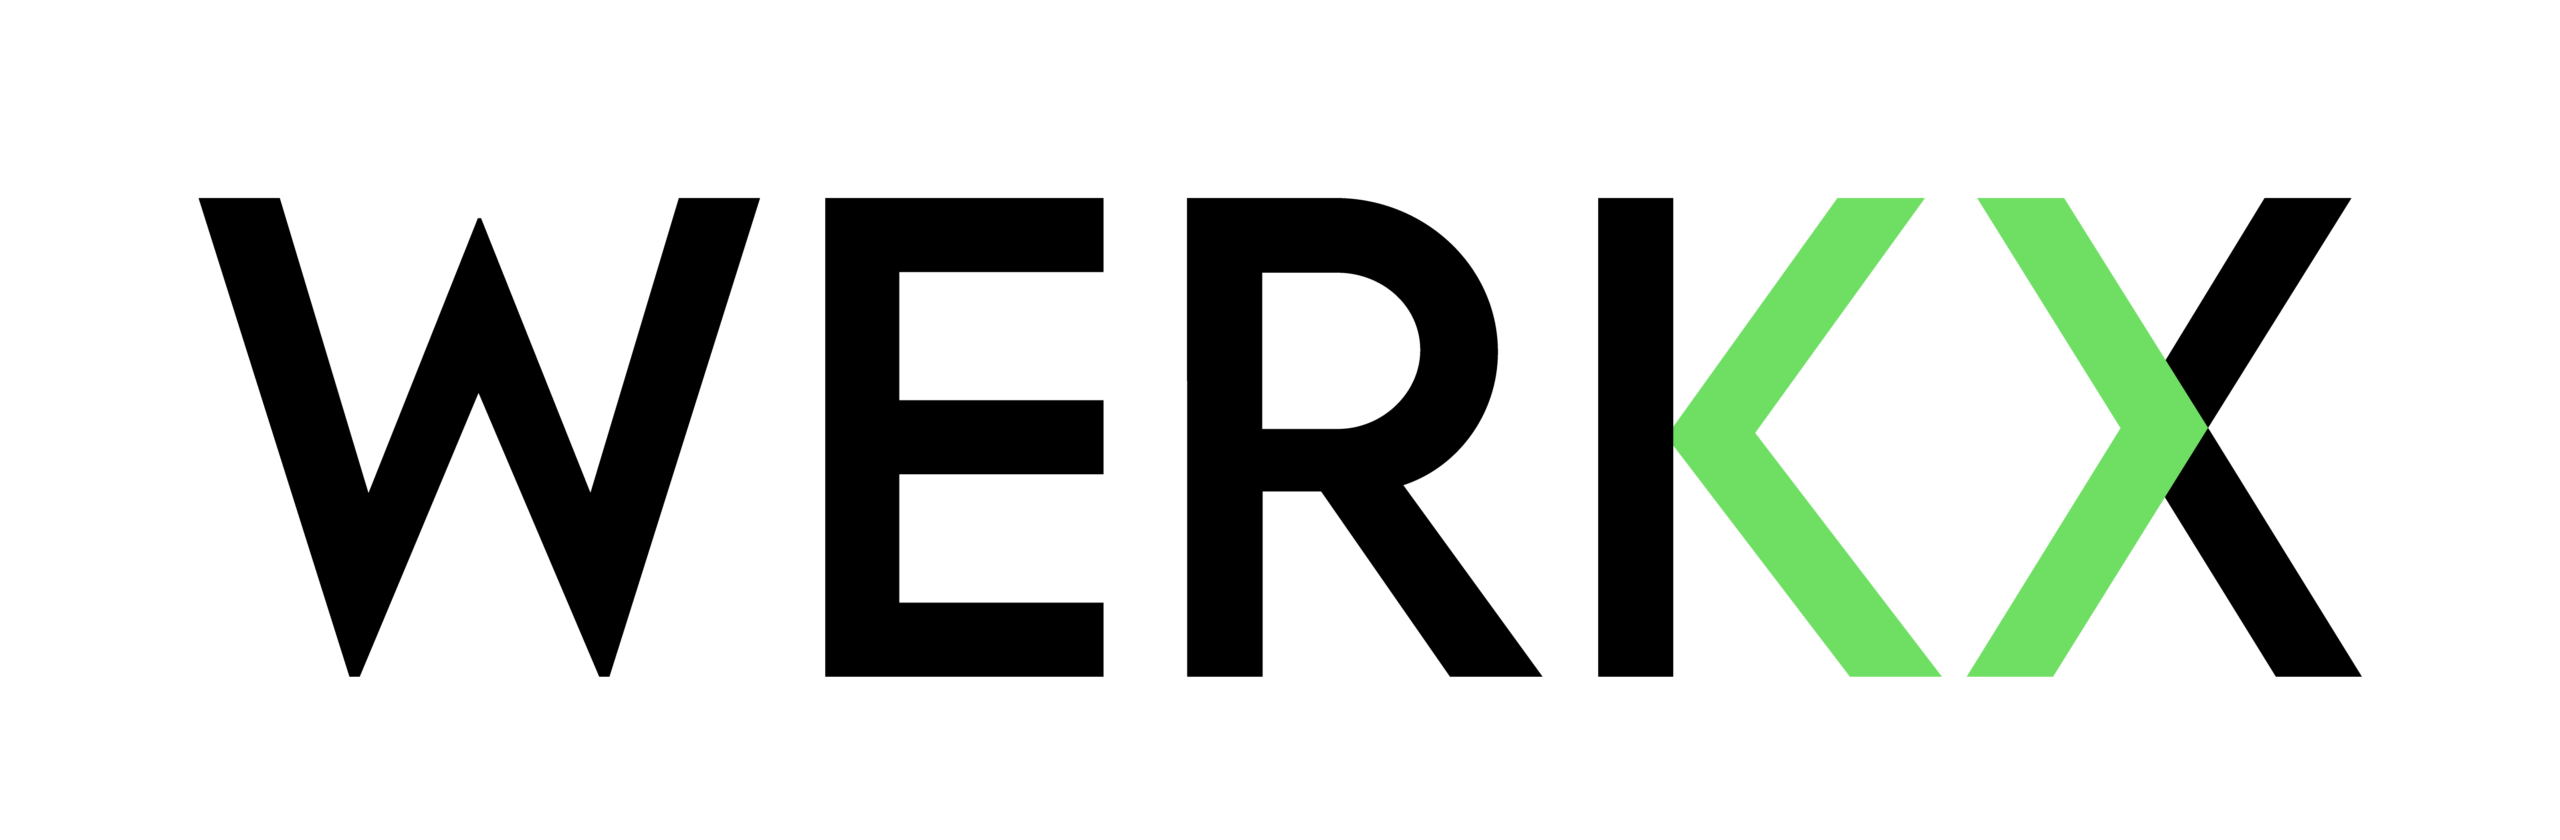 Werkx logo black and green